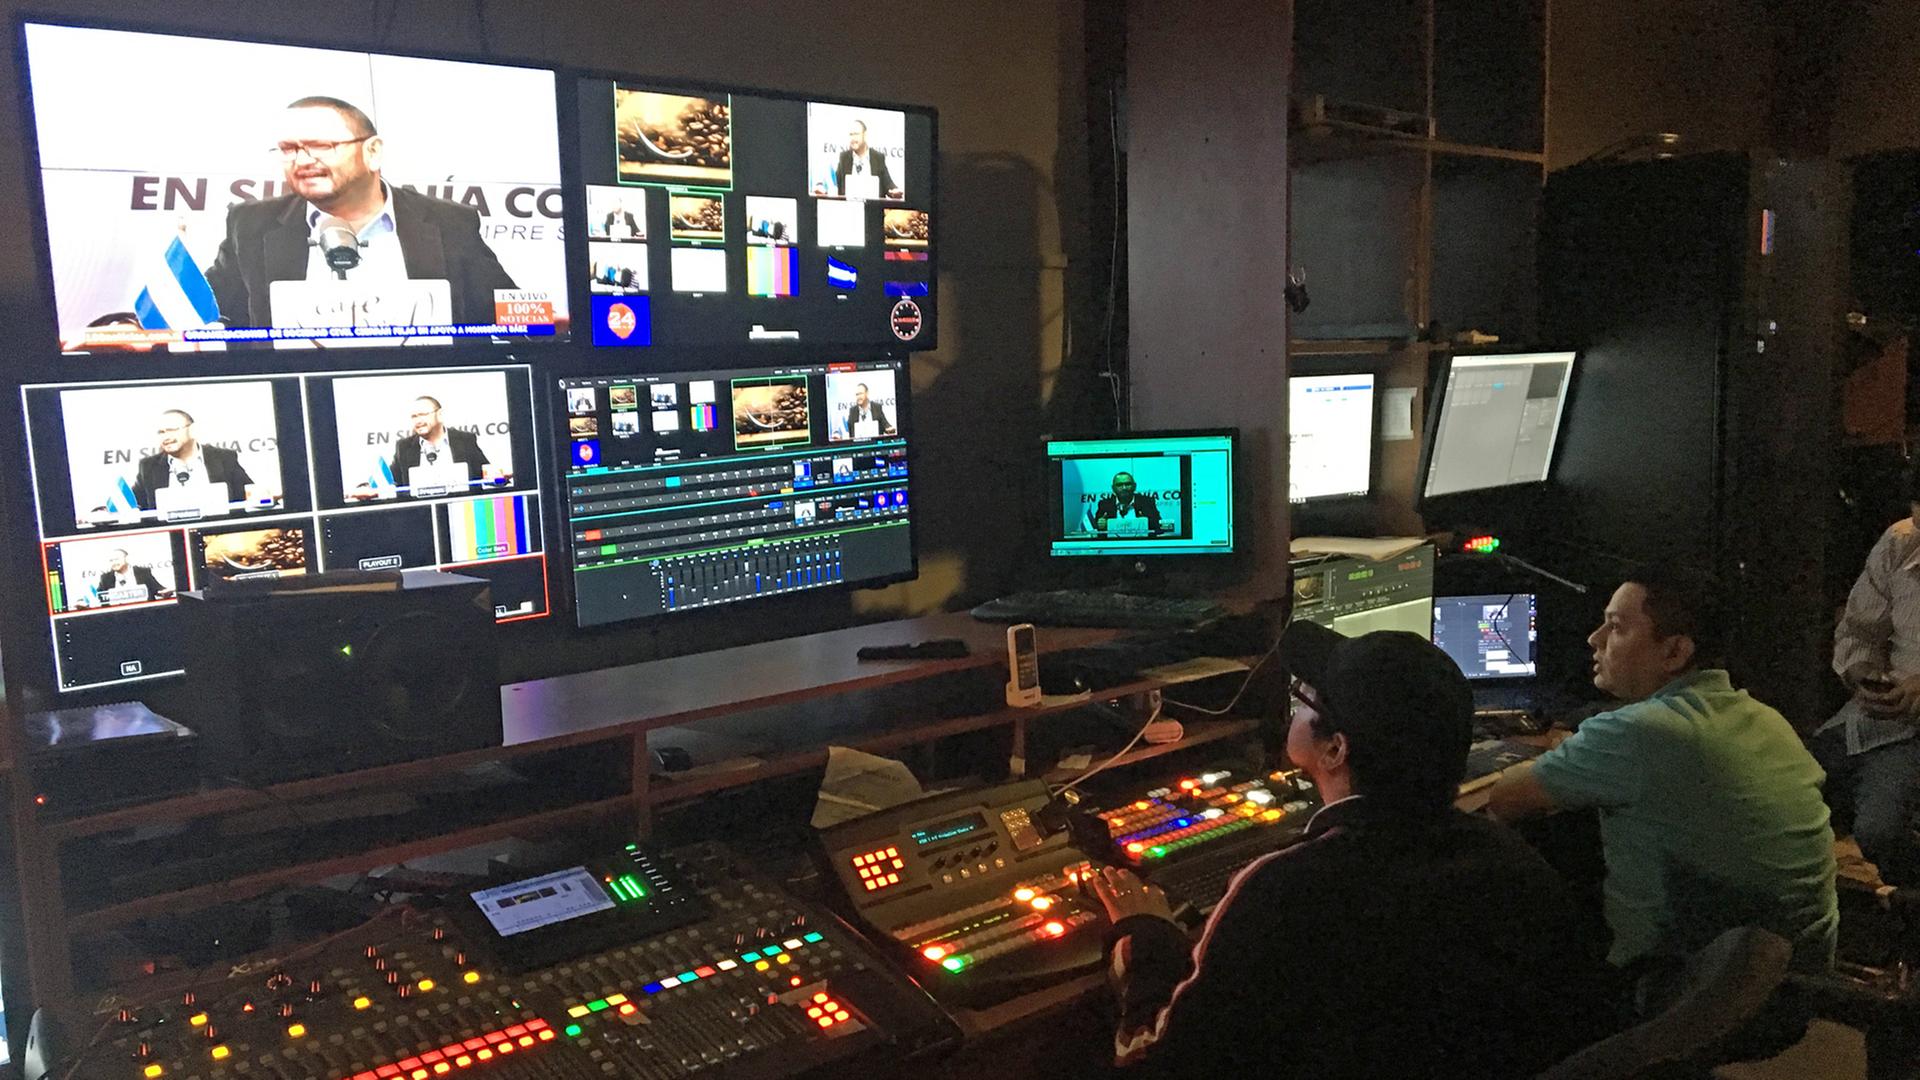 Das Studio des TV Senders "100 % Noticias" in Nicaragua